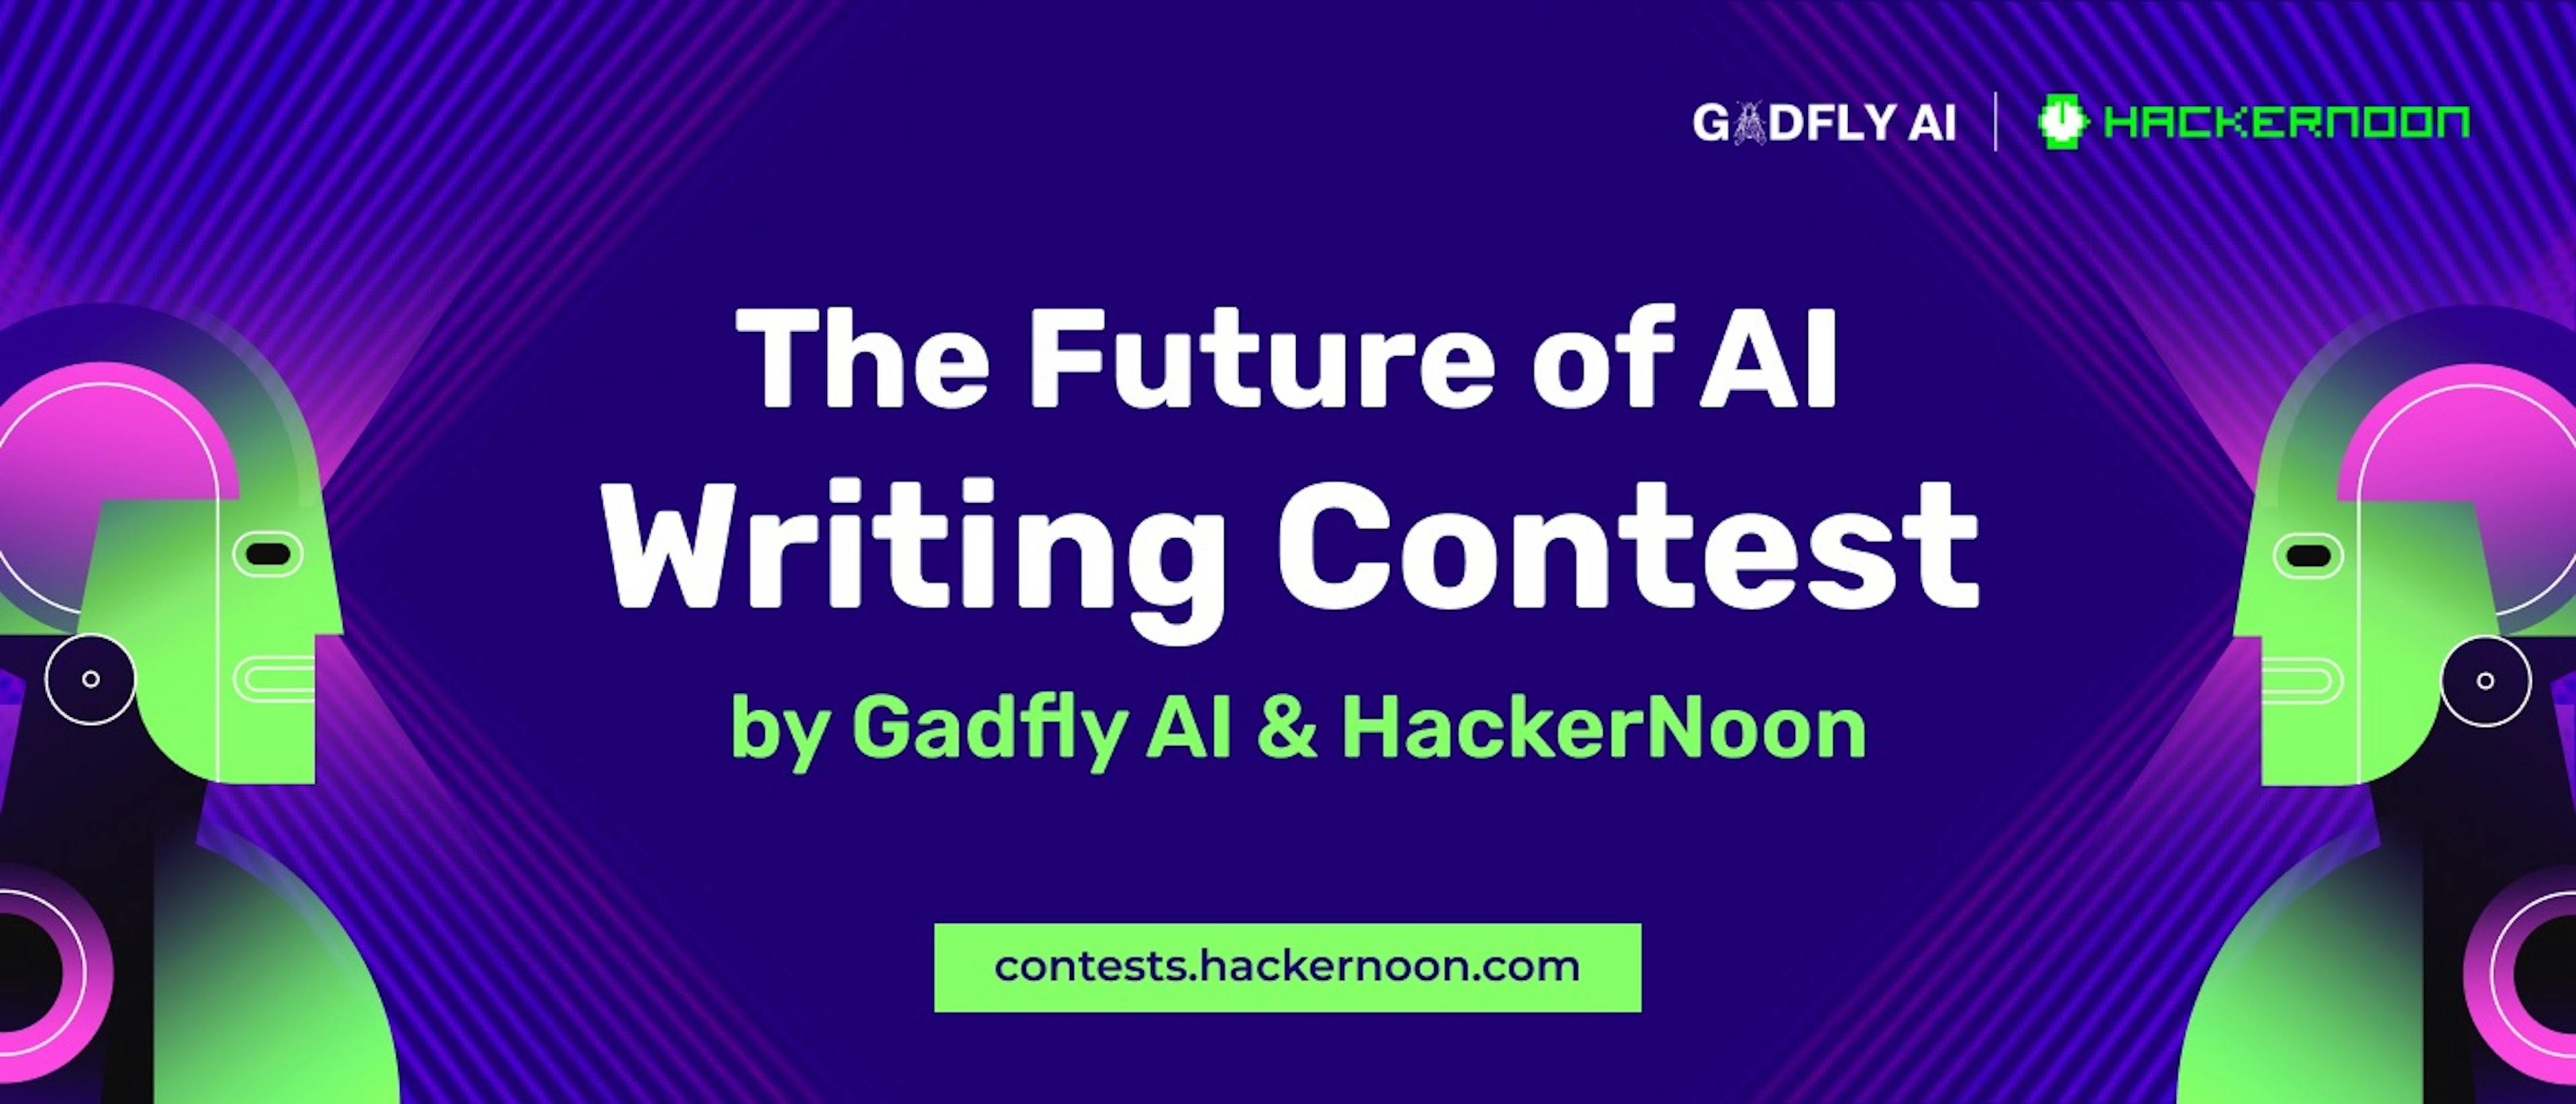 featured image - Gadfly AI による AI の未来ライティング コンテスト